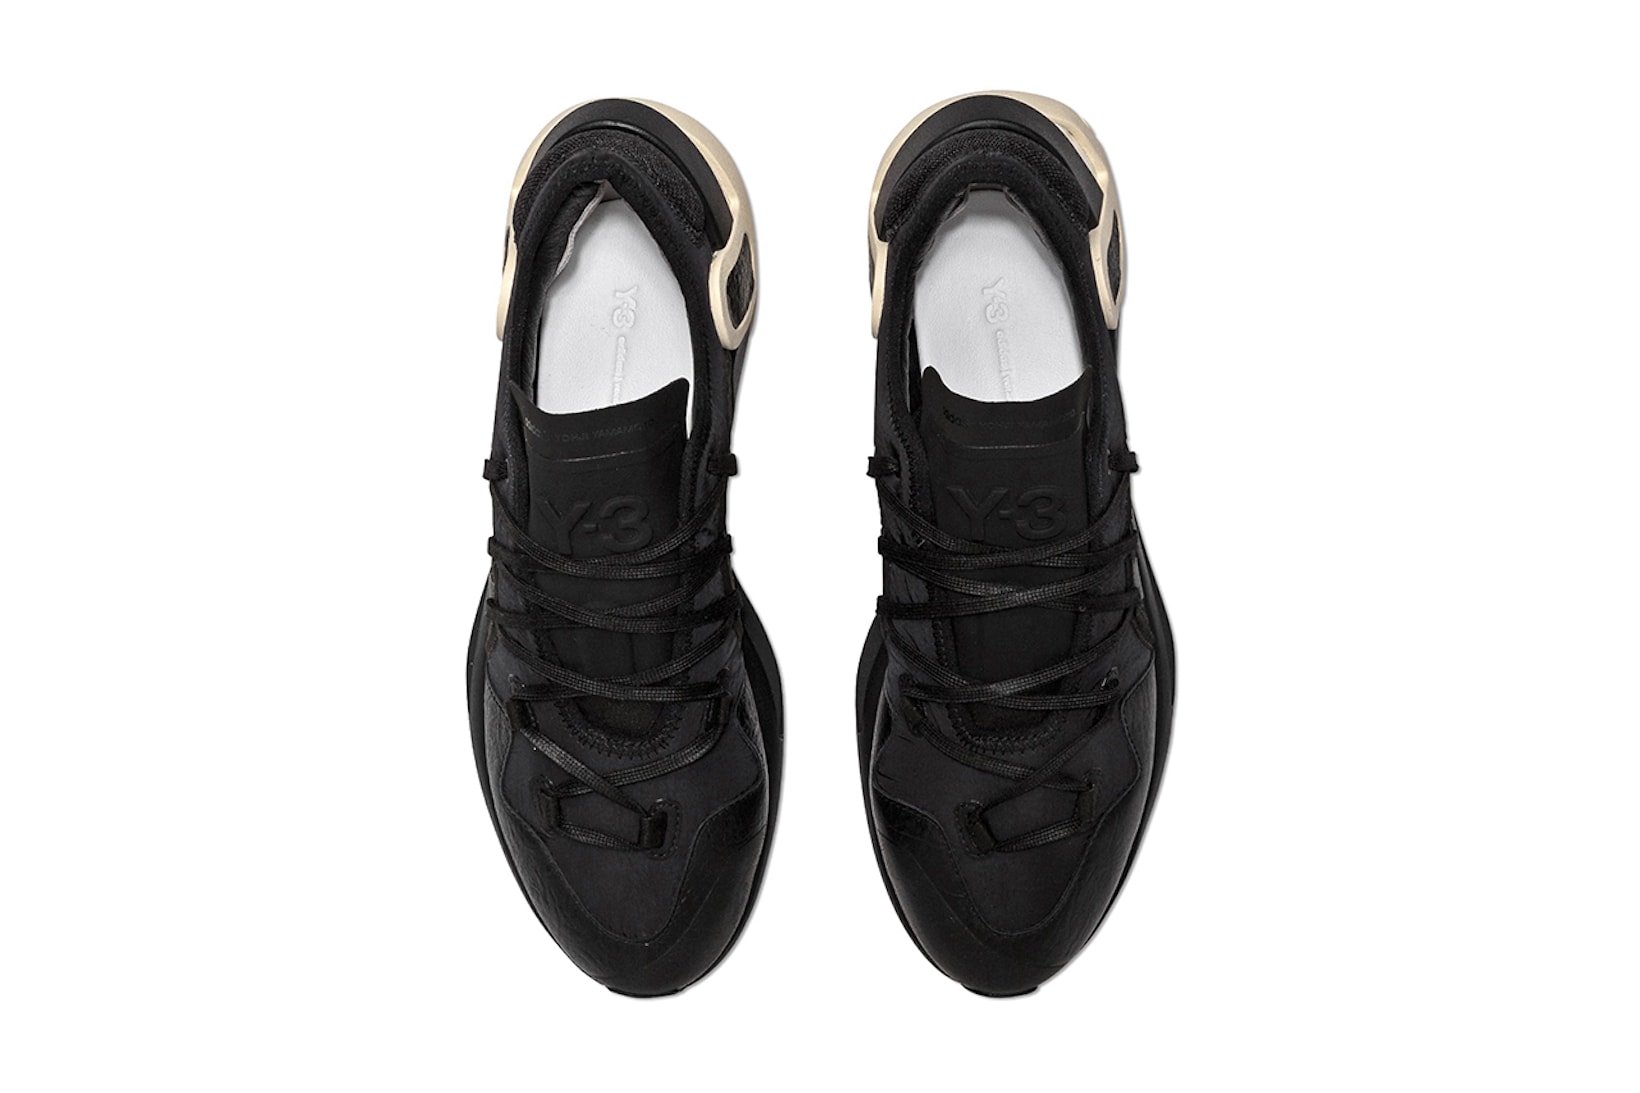 adidas Y-3 IDOSO BOOST Sneakers Footwear Shoes Black Cream Top Insole